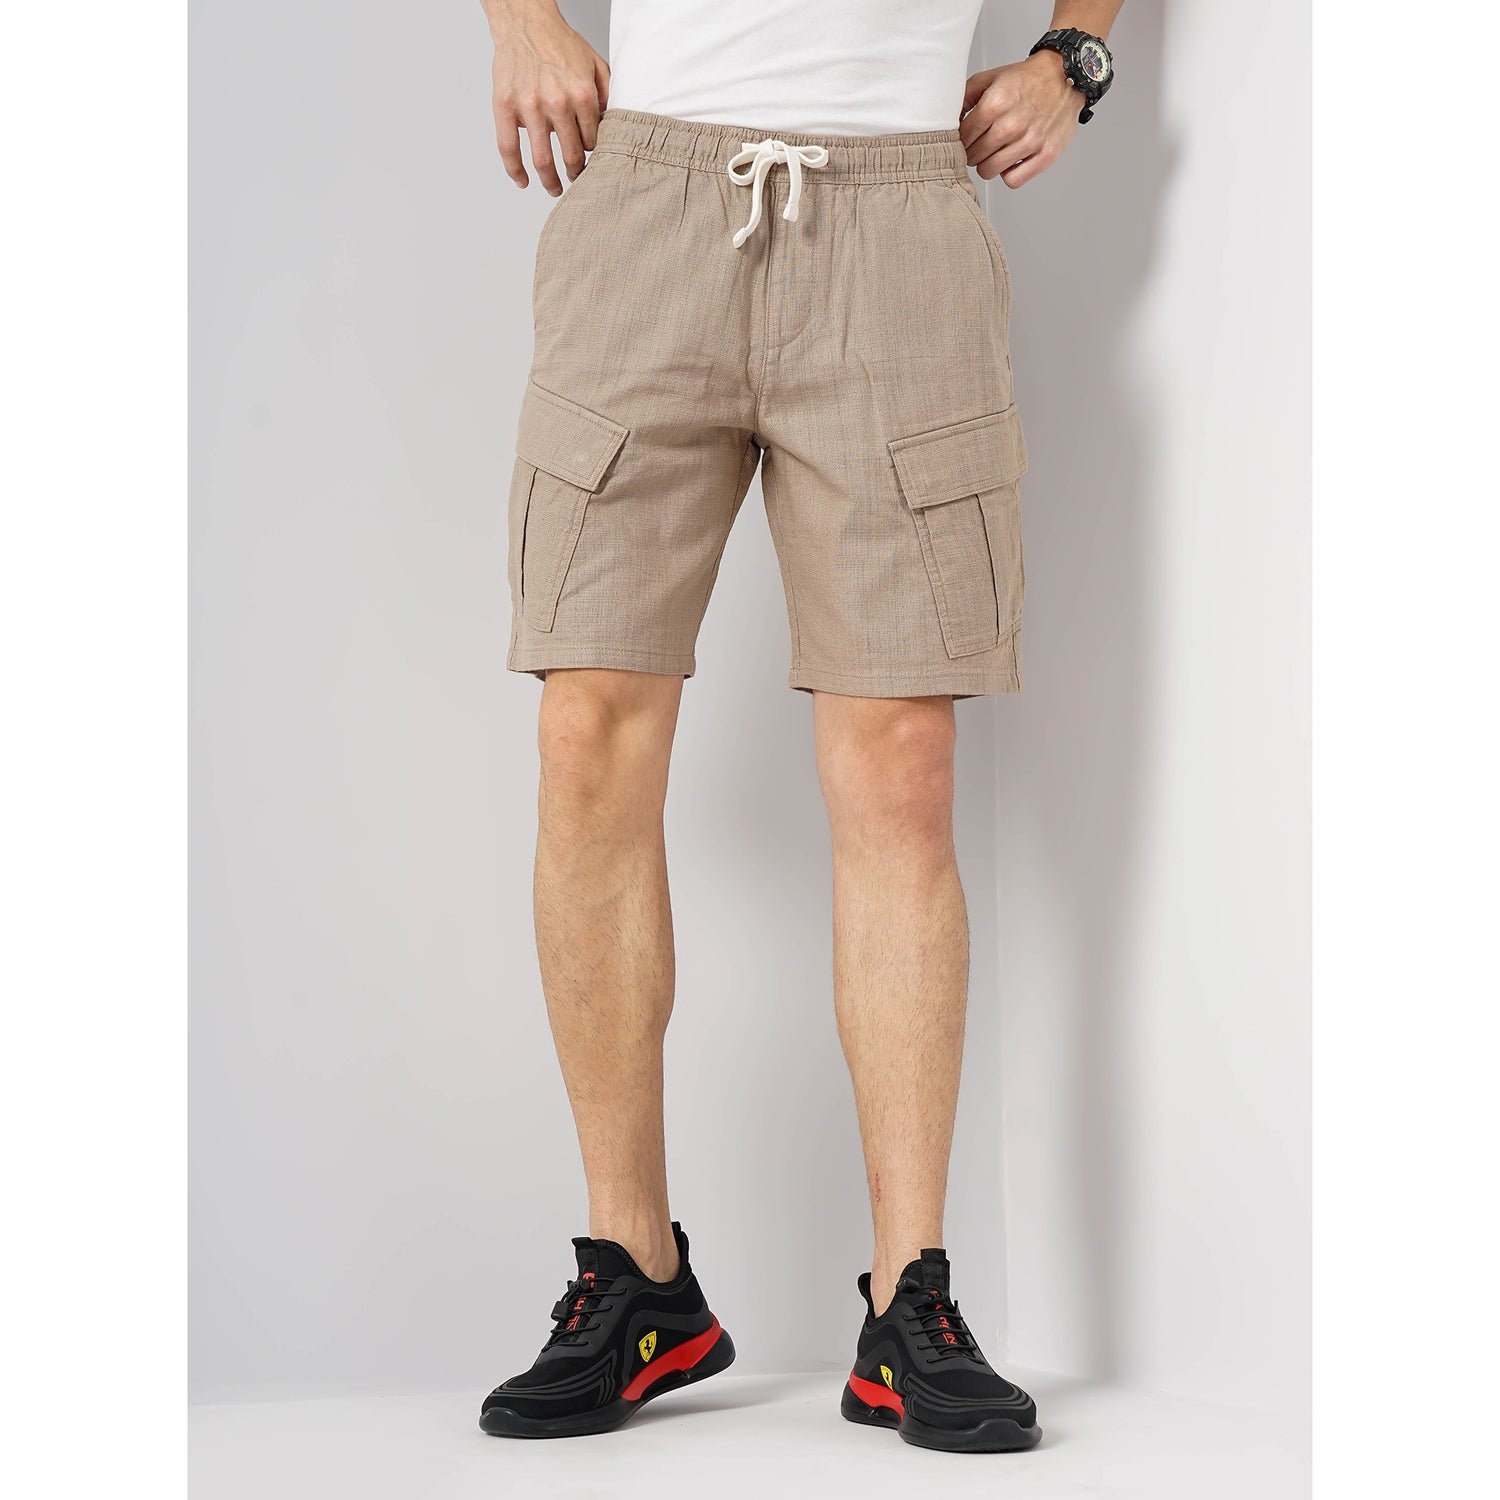 Men Beige Solid Loose Fit Cotton Cargo Casual Shorts (GOCARGOBM)